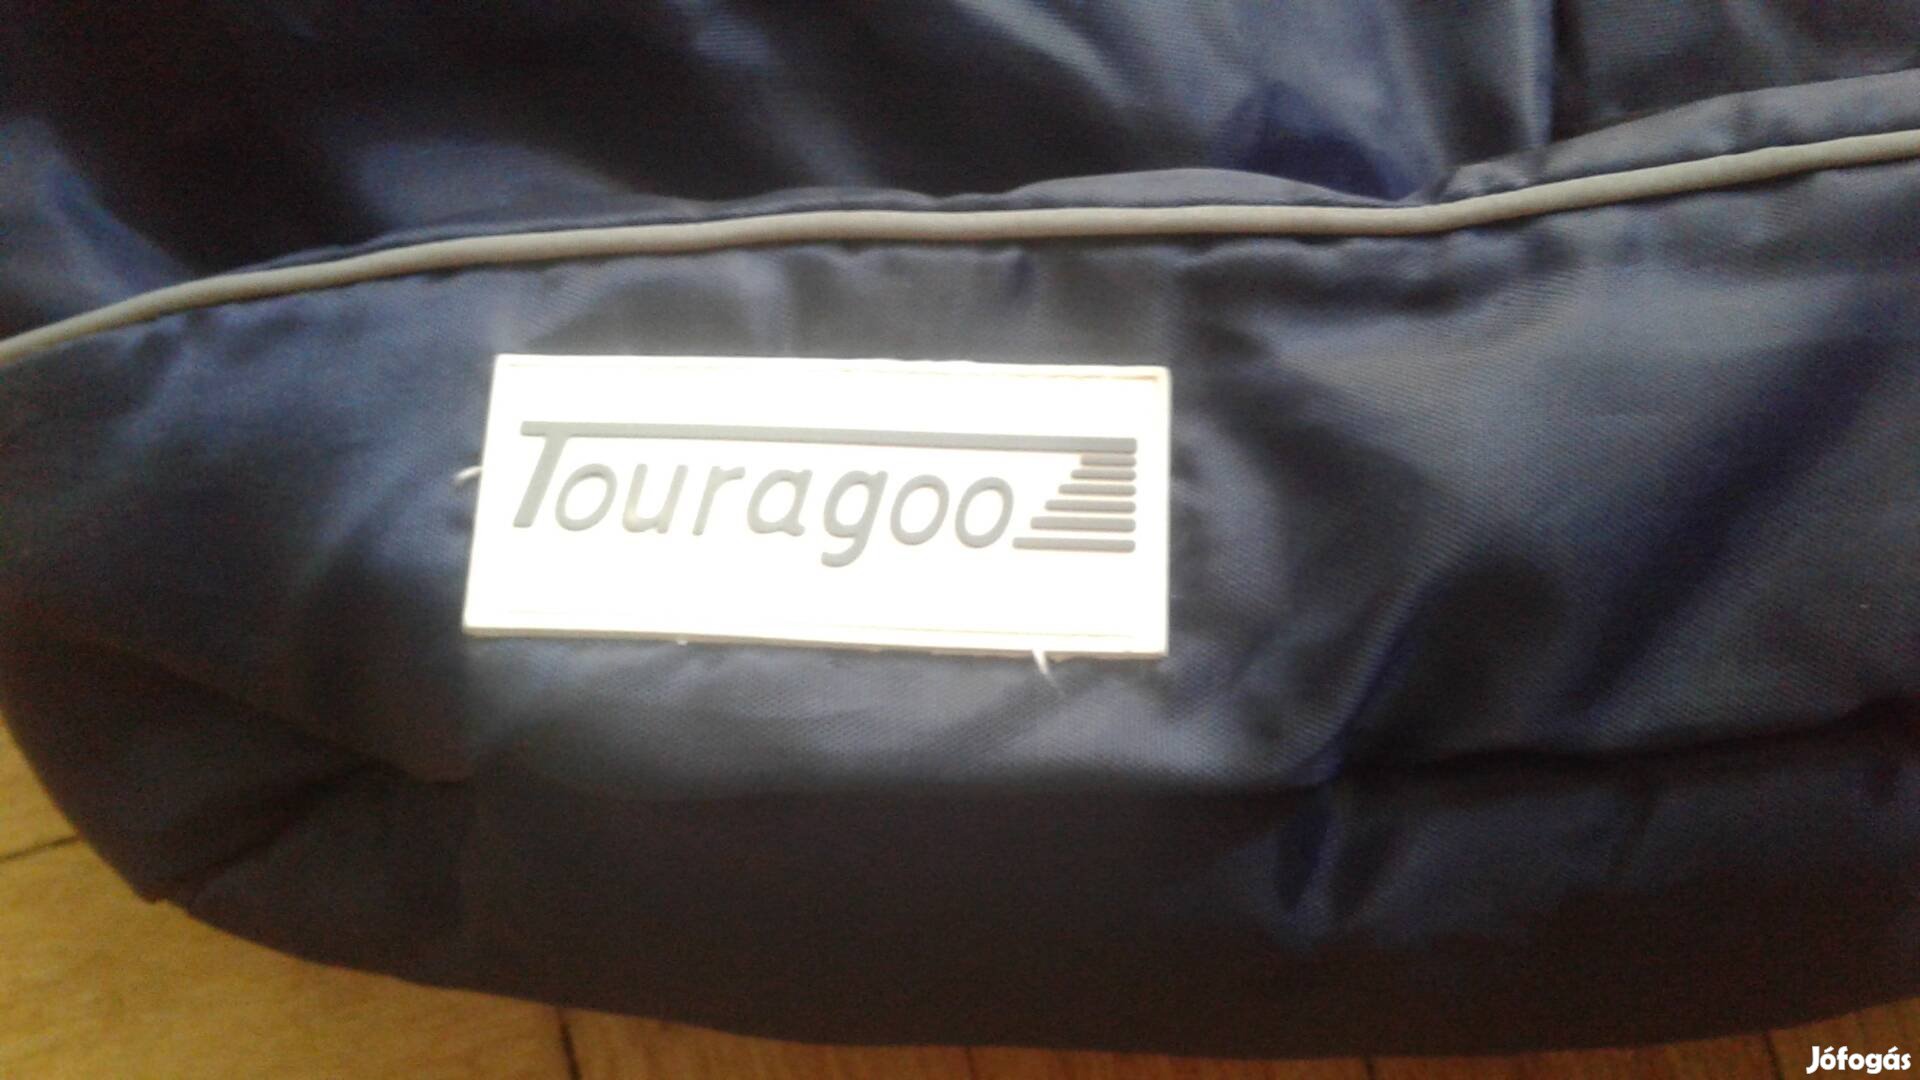 Touragoo bundazsák